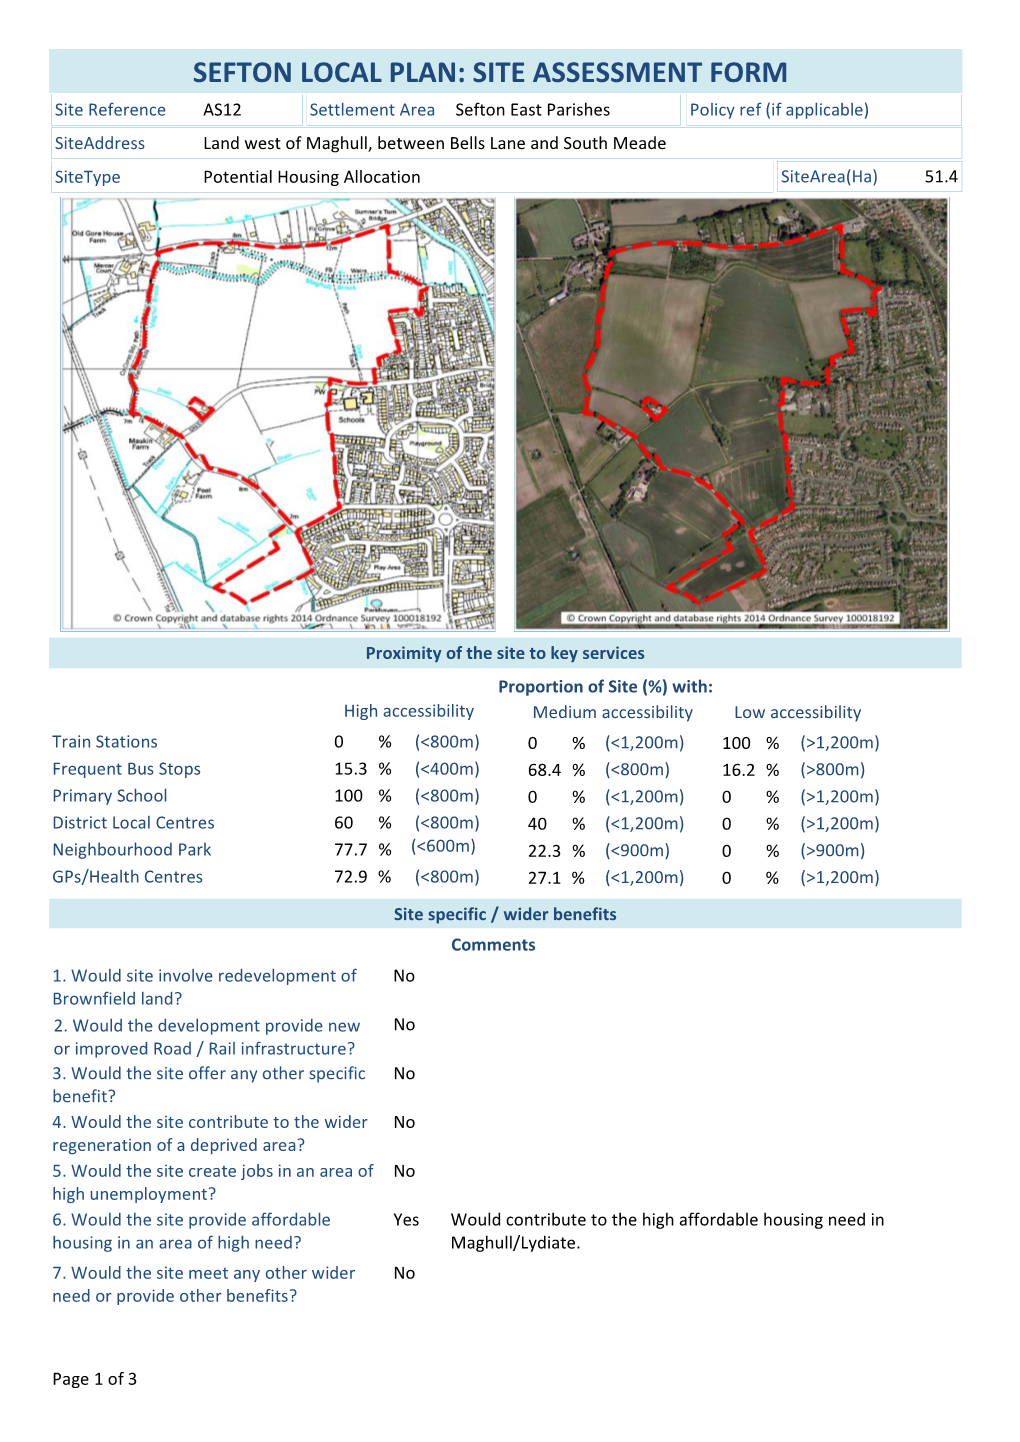 Sefton Local Plan: Site Assessment Form